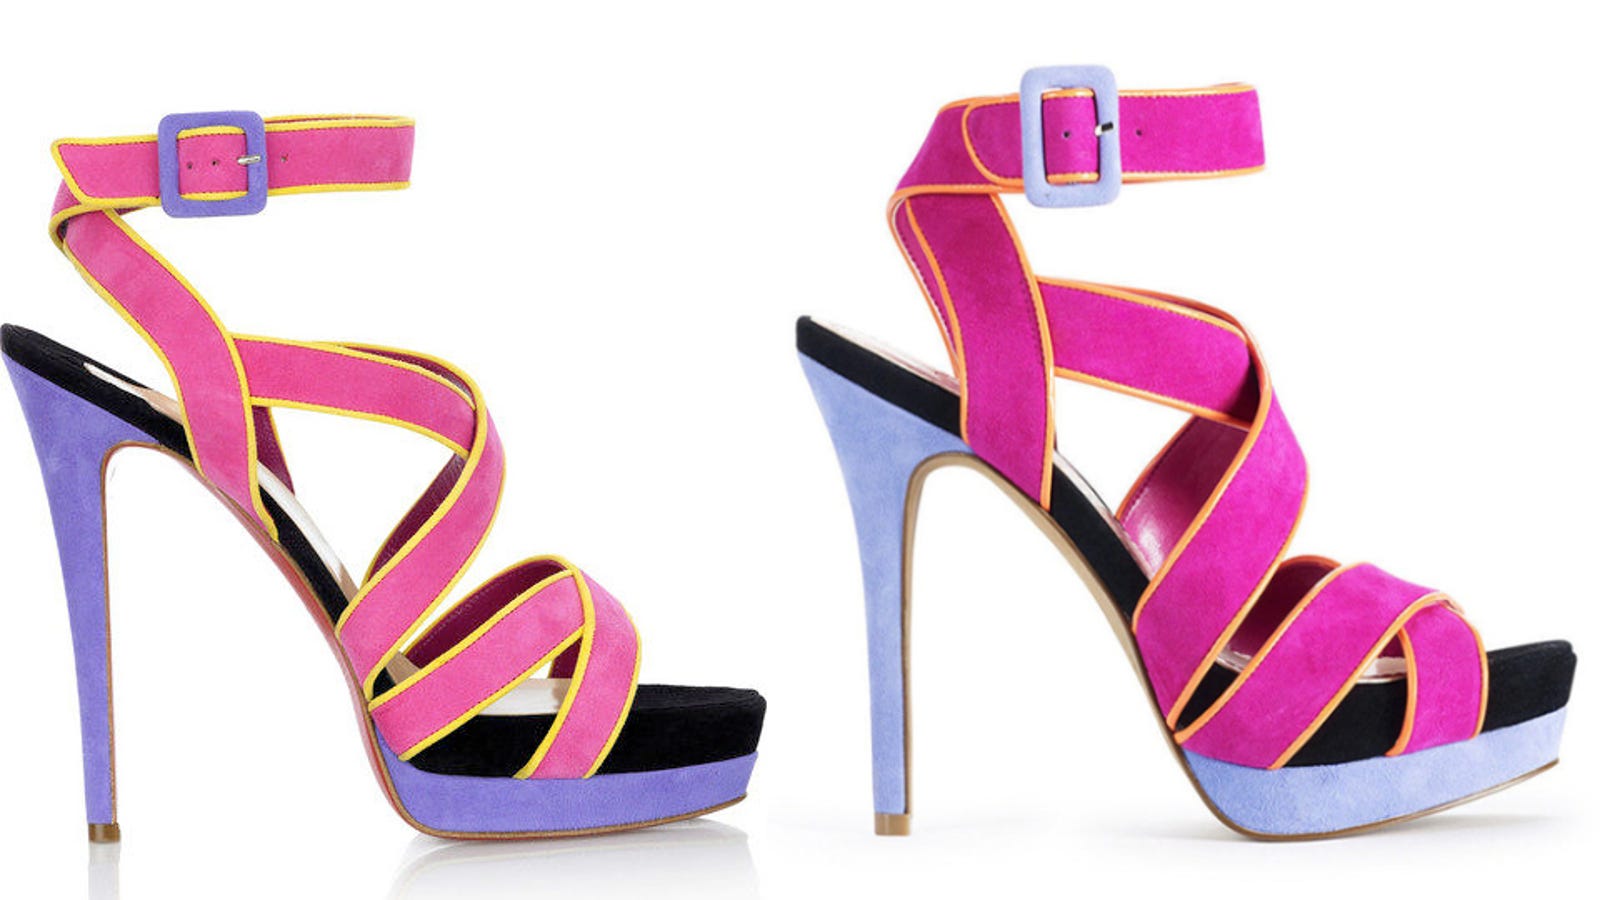 zappos rose gold heels